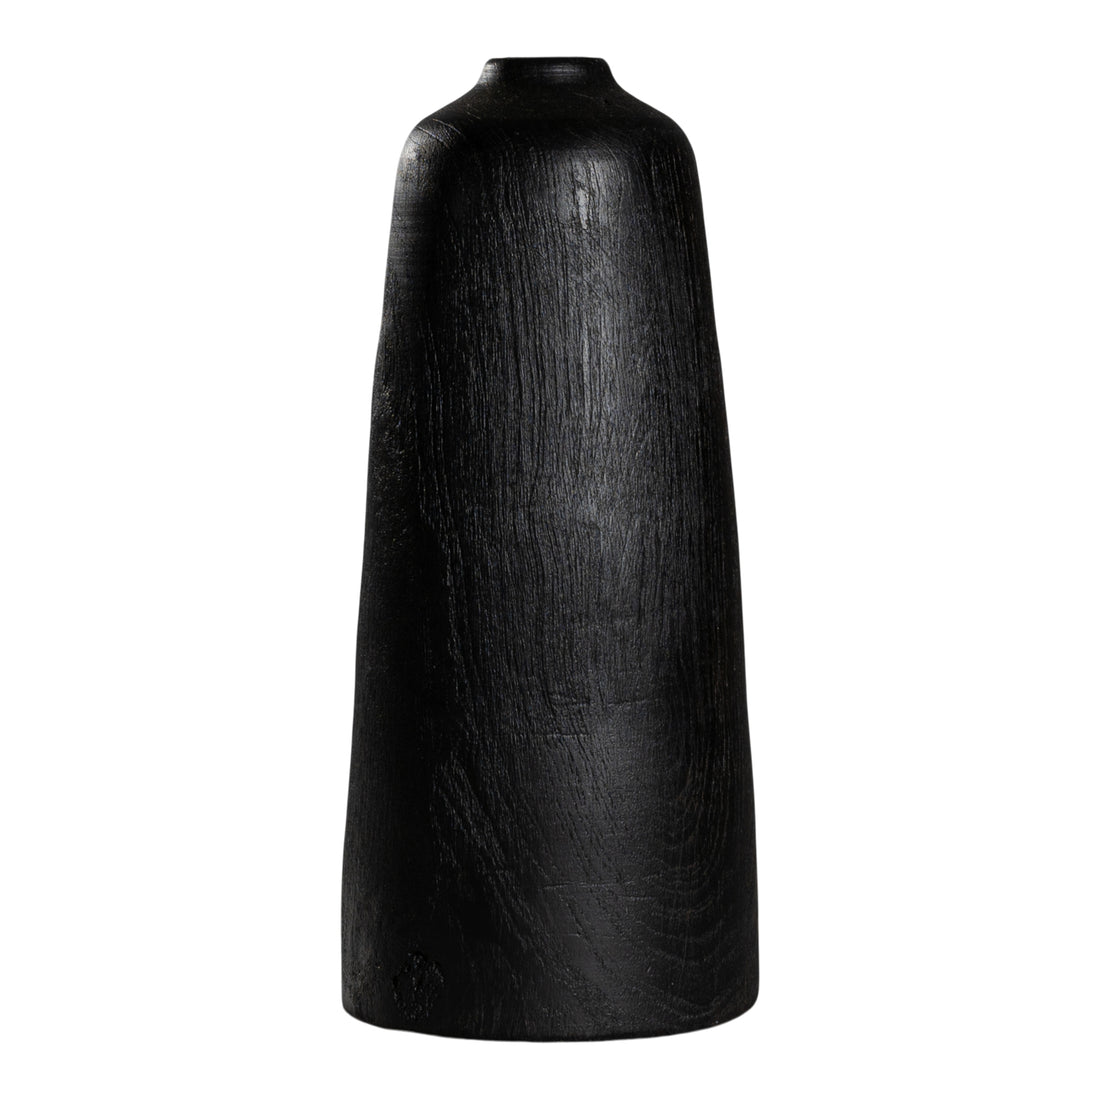 Ingaada Decorative Vase